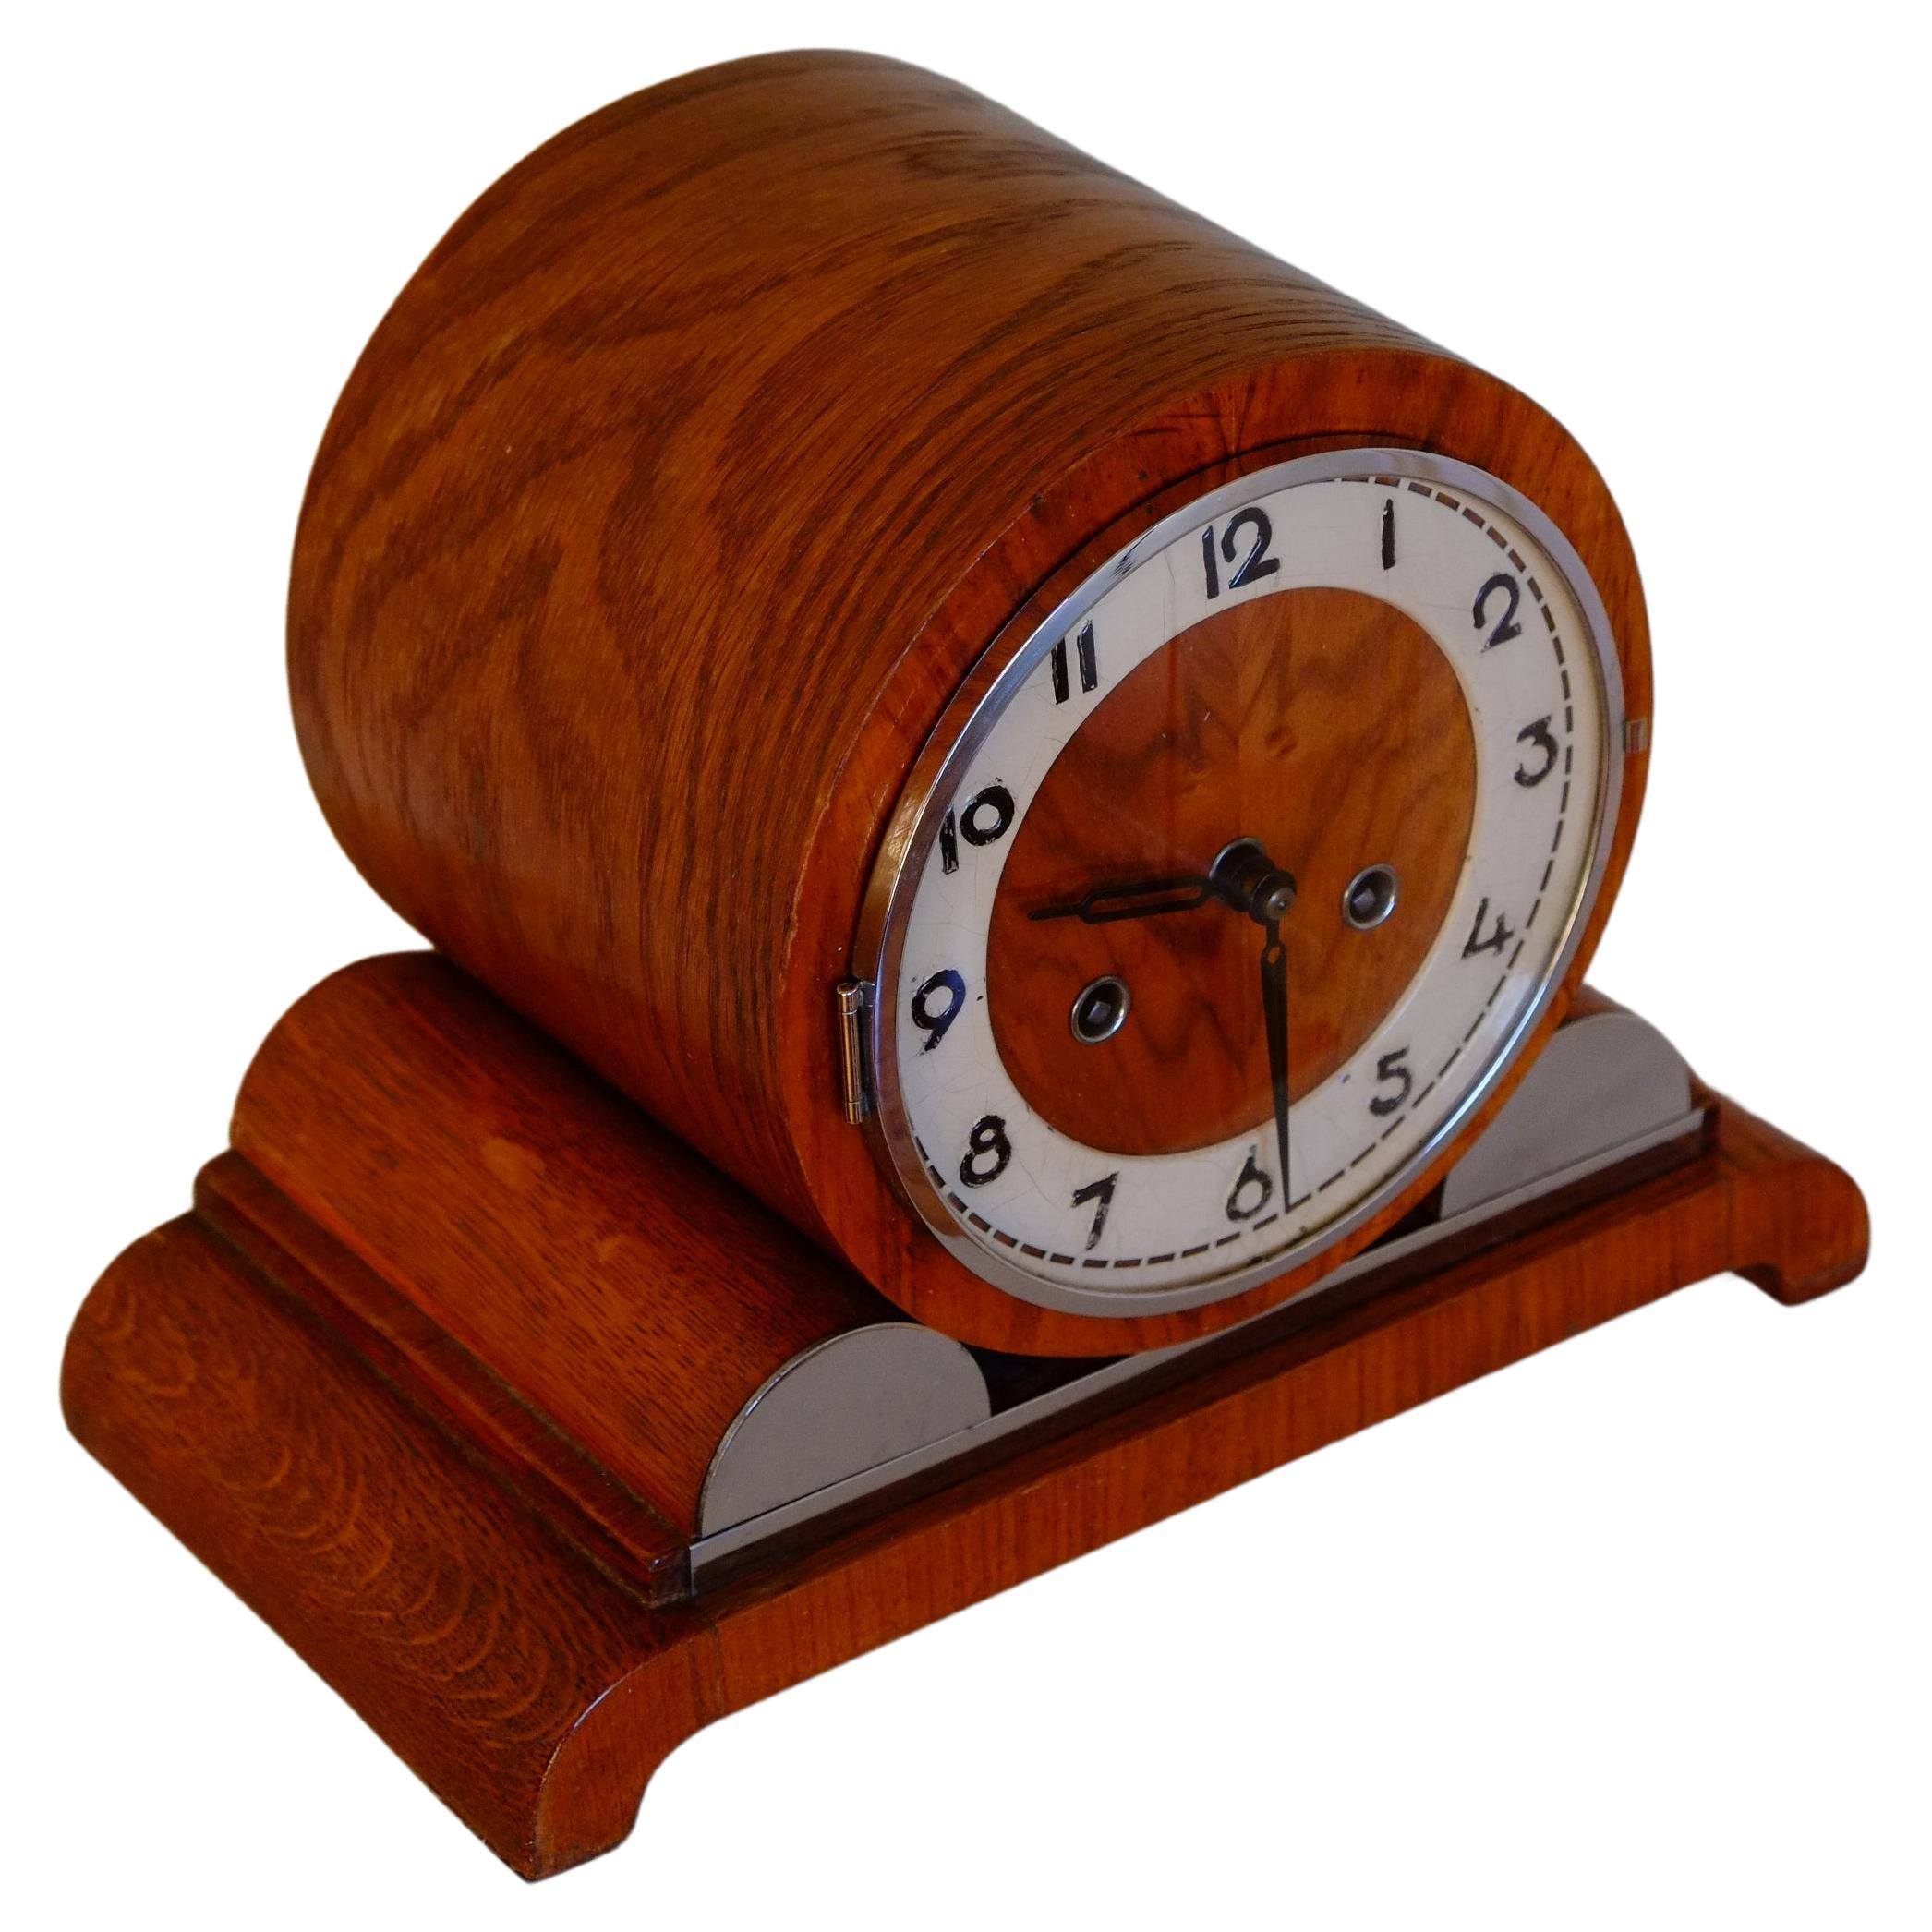 Rare Large Hermle German Bauhaus Wooden Mantle Clock with Chimes